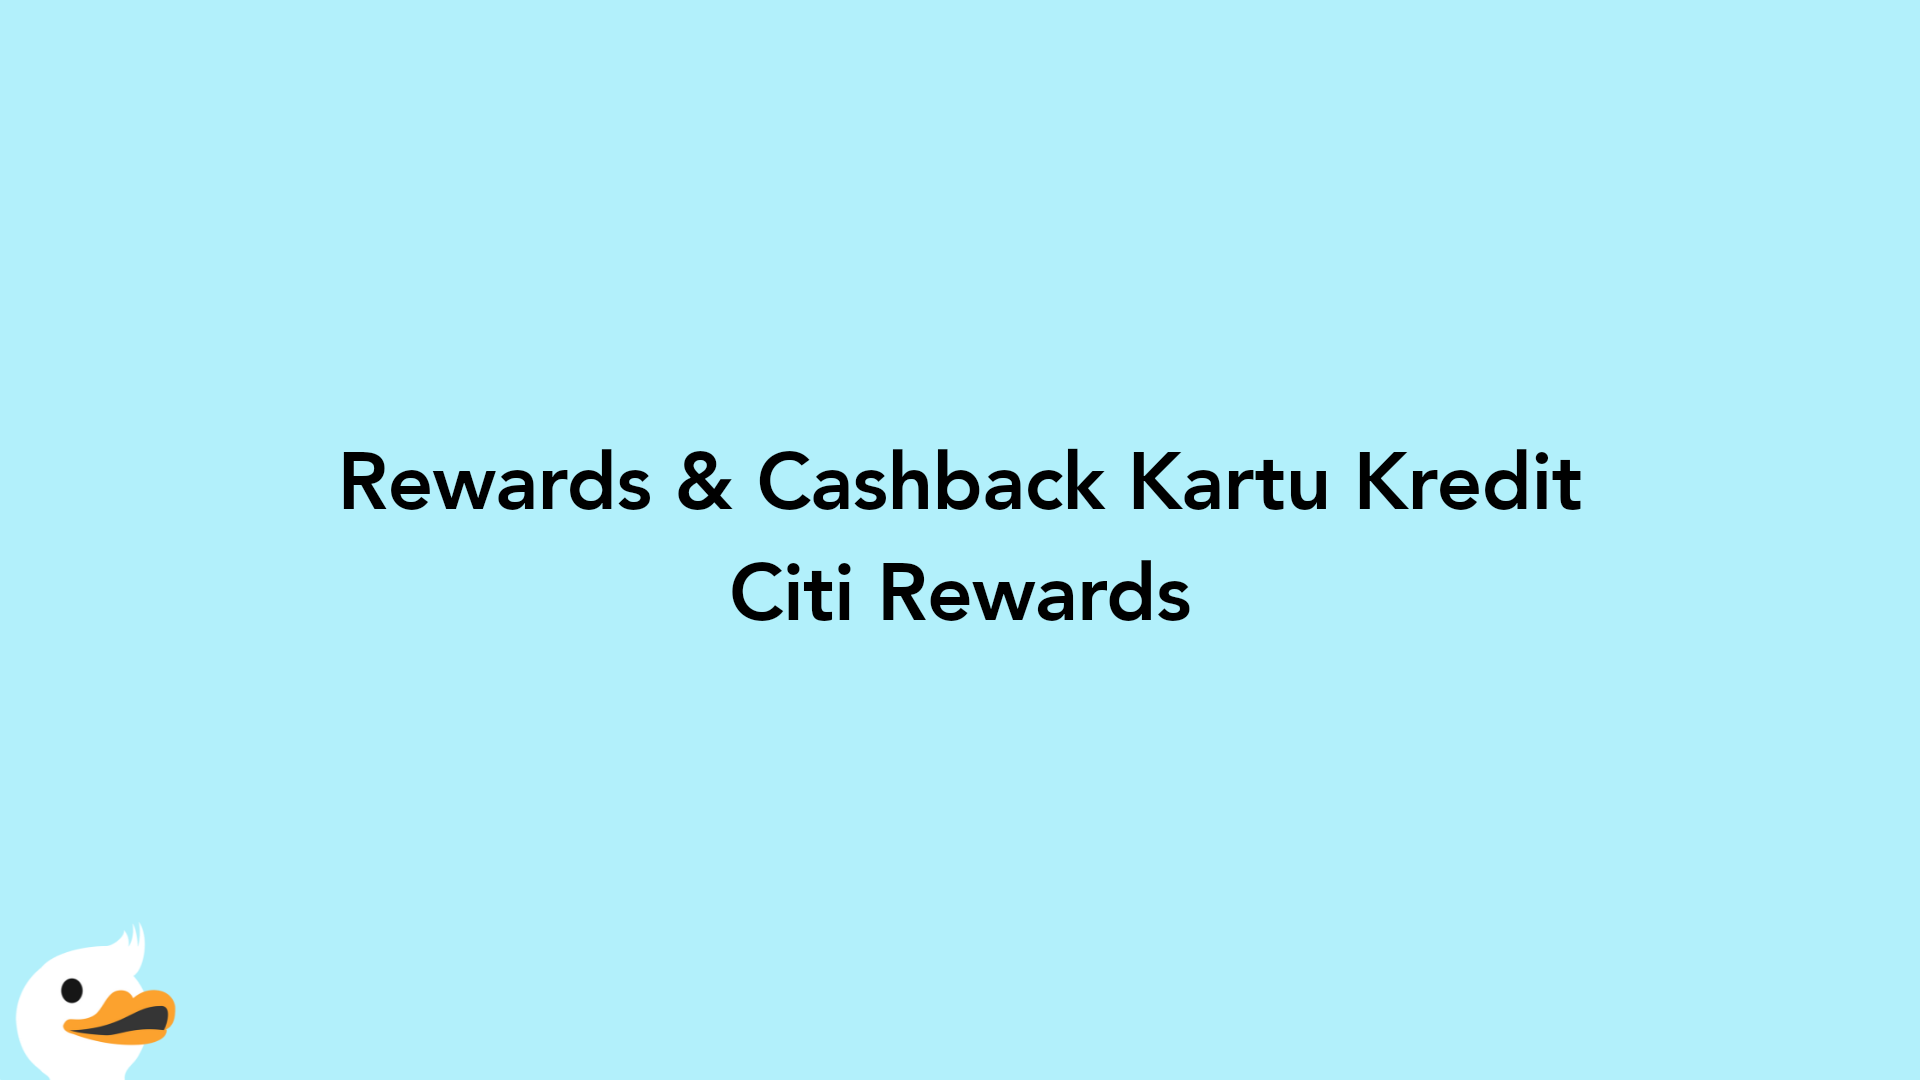 Rewards & Cashback Kartu Kredit Citi Rewards